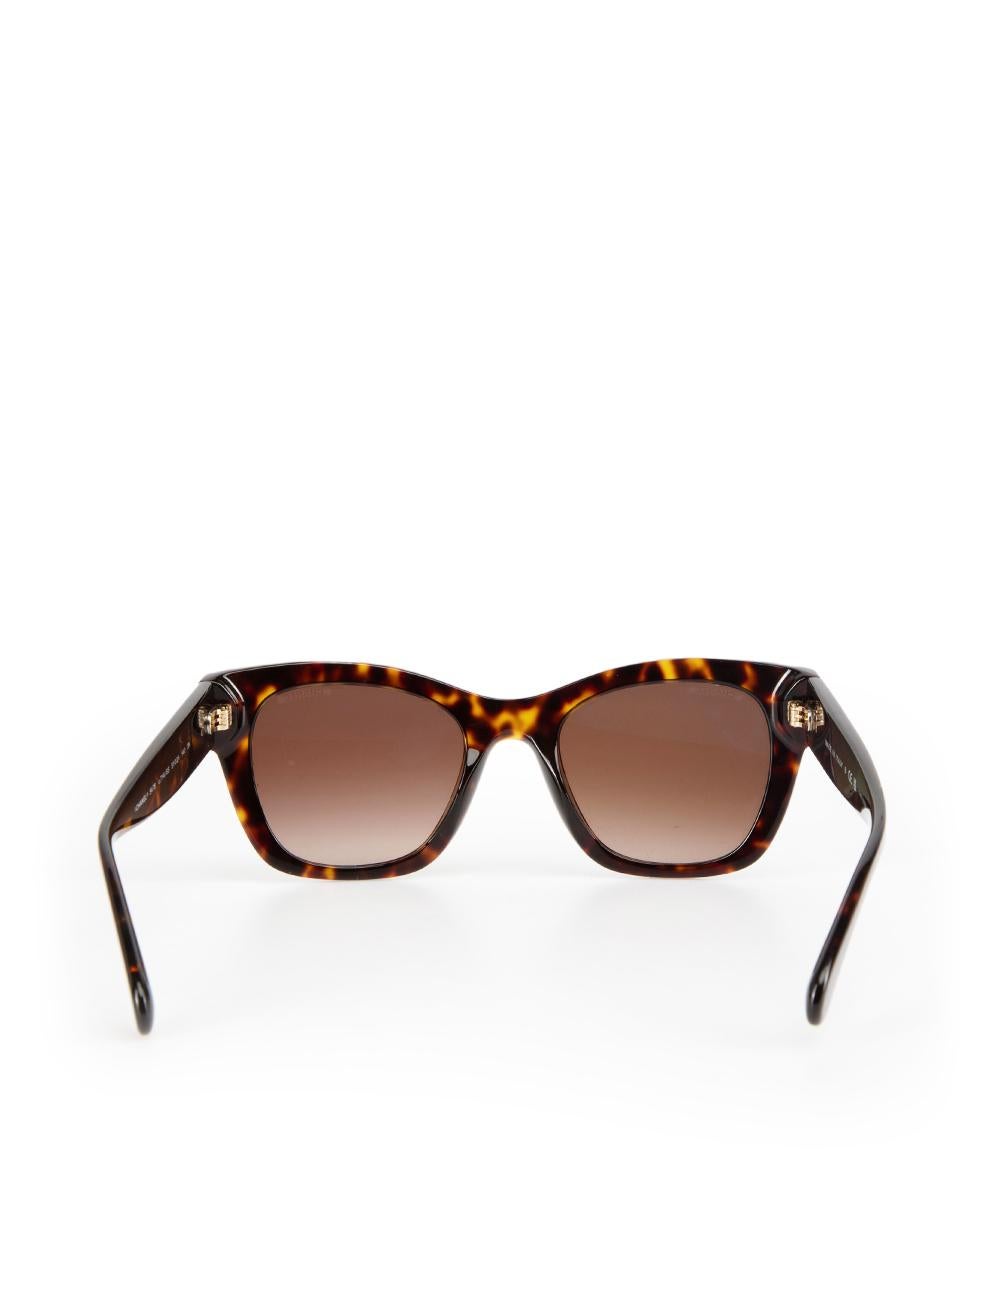 Women's Chanel Dark Tortoise Square Sunglasses For Sale